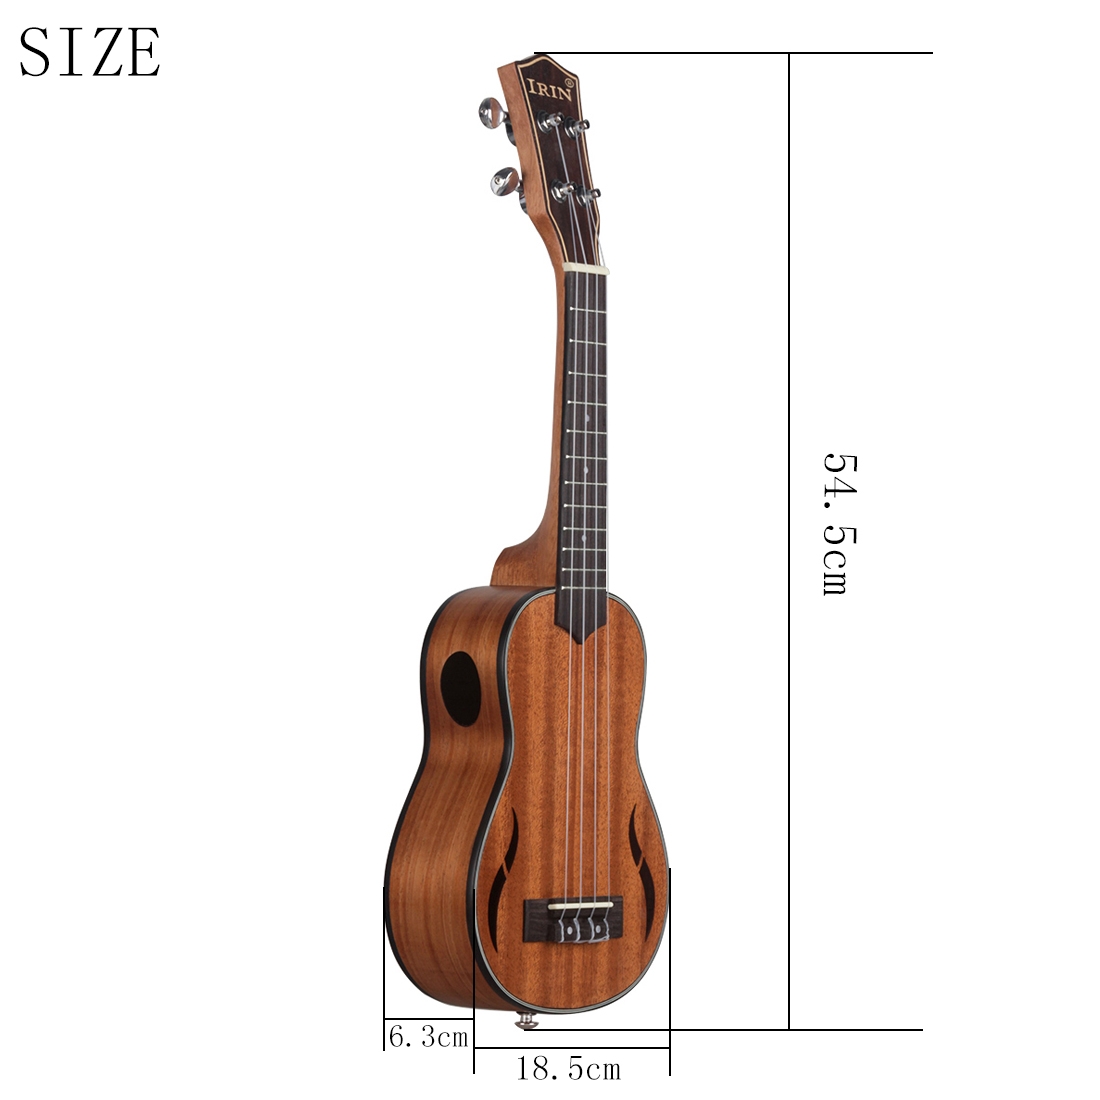 IRIN 4 String 21 Inch Walnut Wood Soprano Ukulele Acoustic Guitar Mahogany Fingerboard Neck Hawaii Guitarra